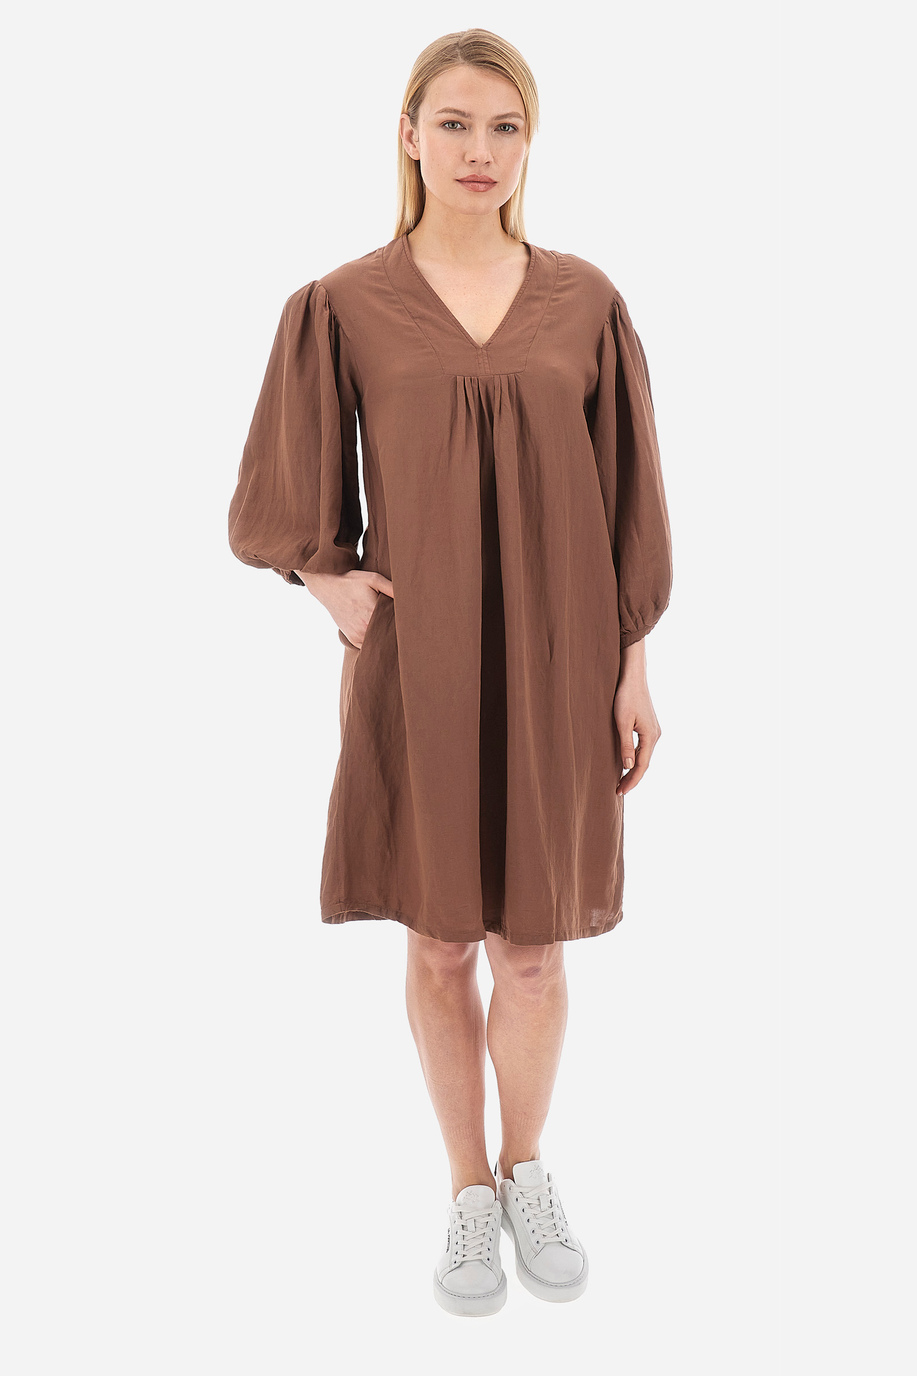 Robe femme en polylin, manches 3/4 - Valaria - Vêtements | La Martina - Official Online Shop